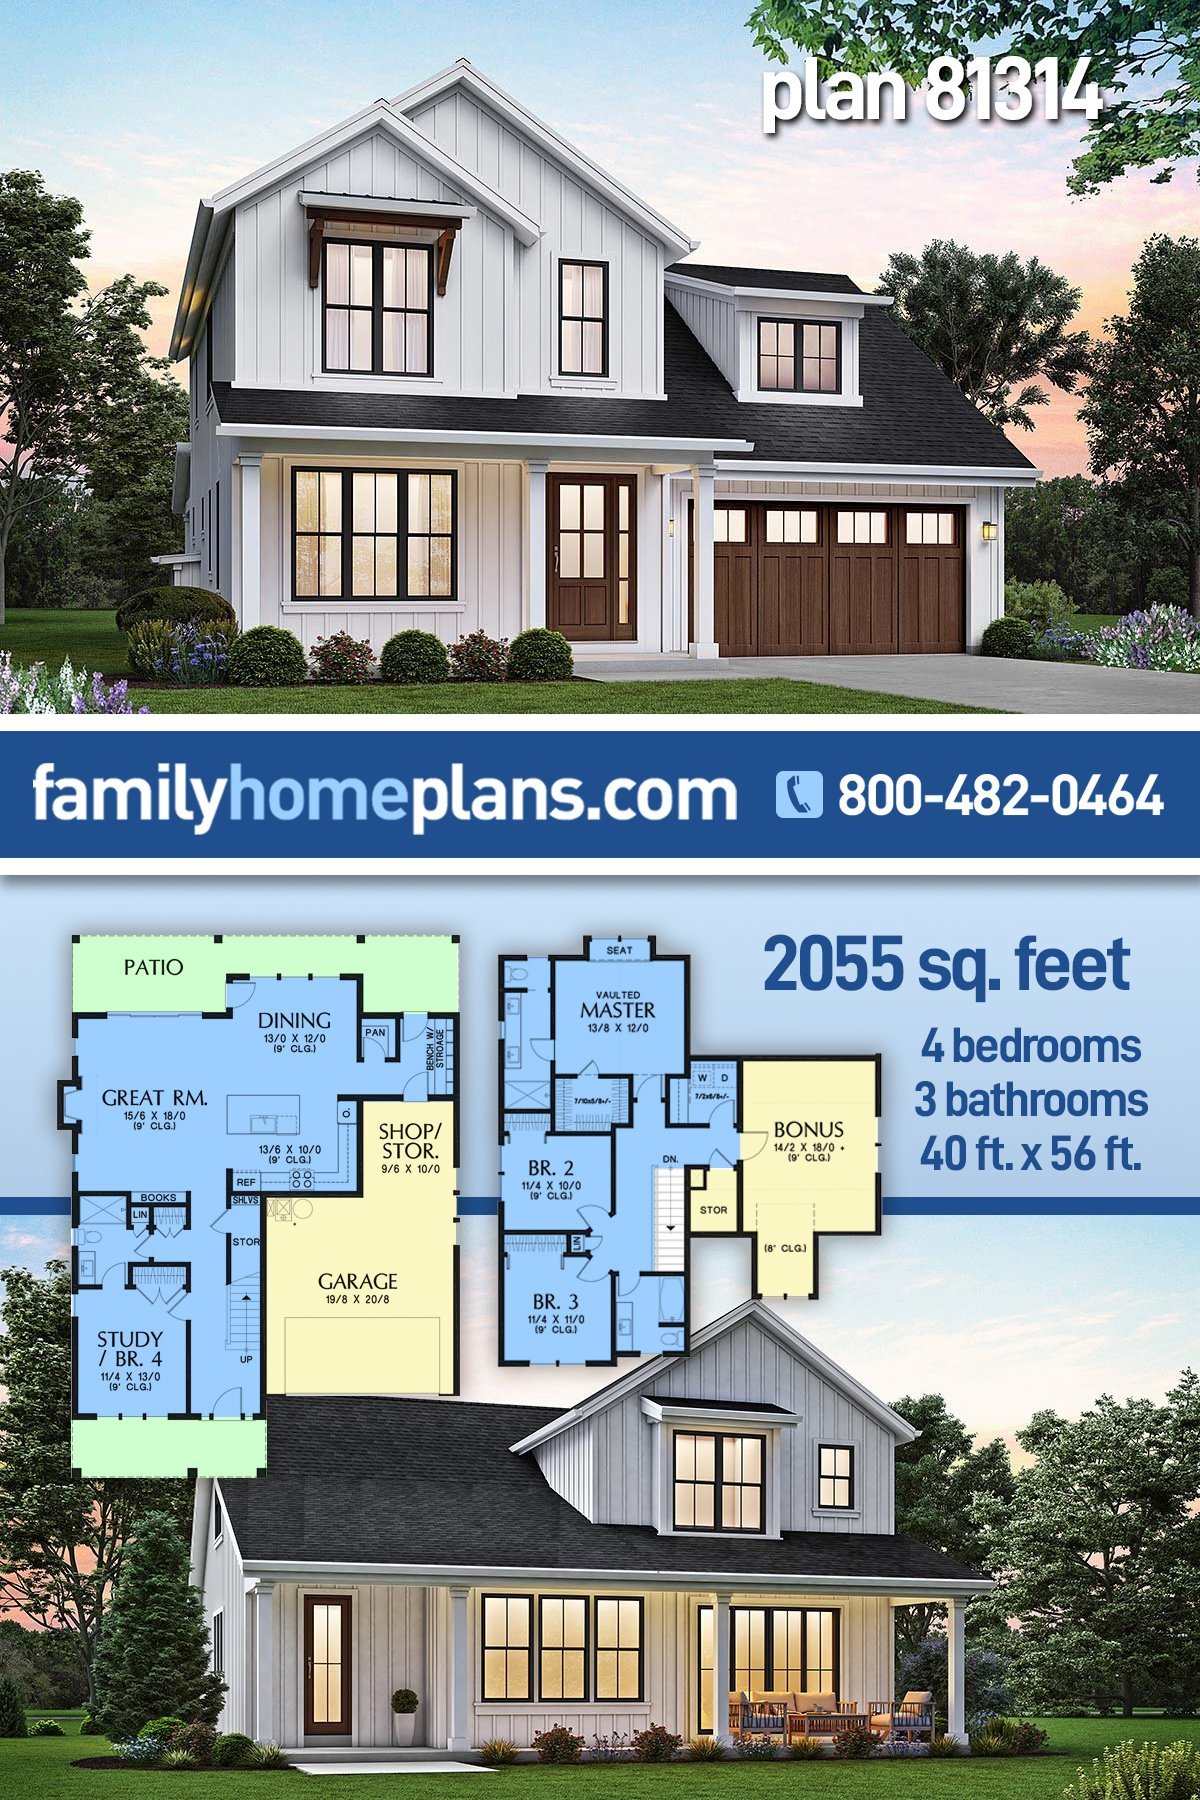 House Plan 81314